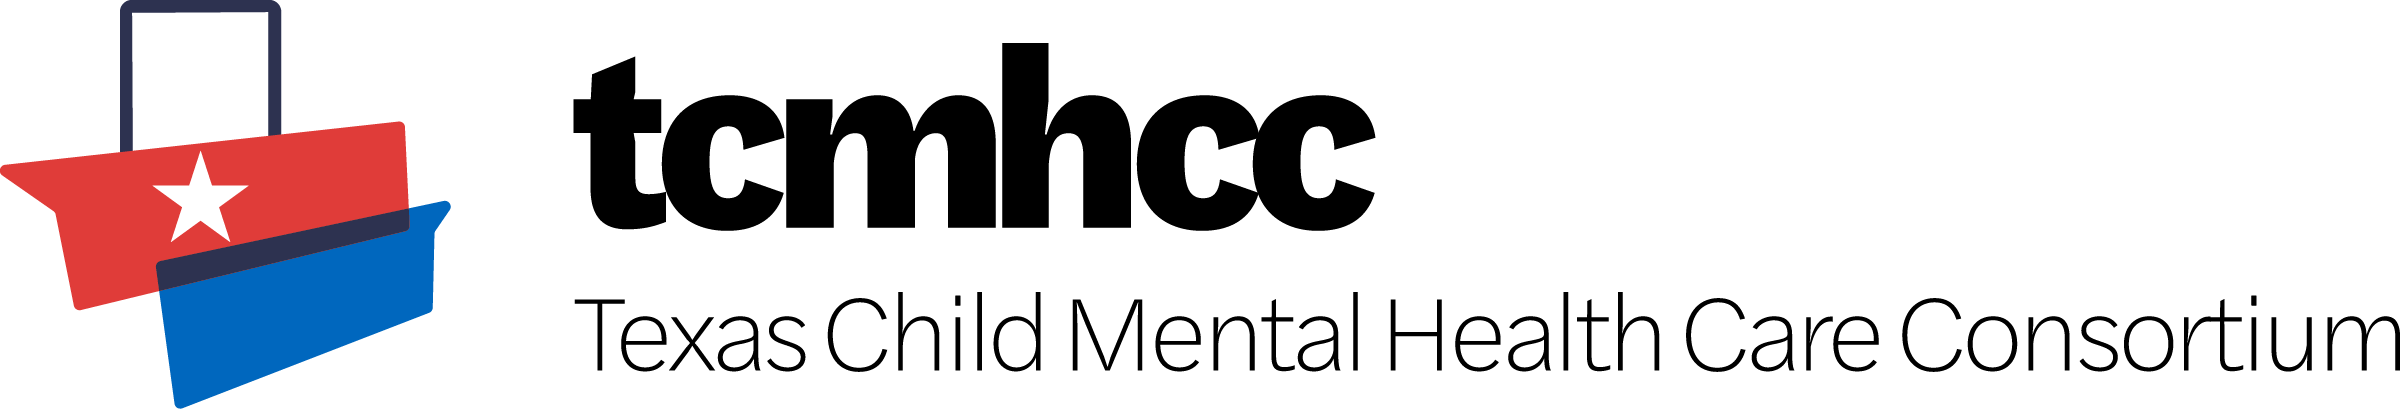 The Texas Child Mental Health Care Consortium (TCMHCC) Logo